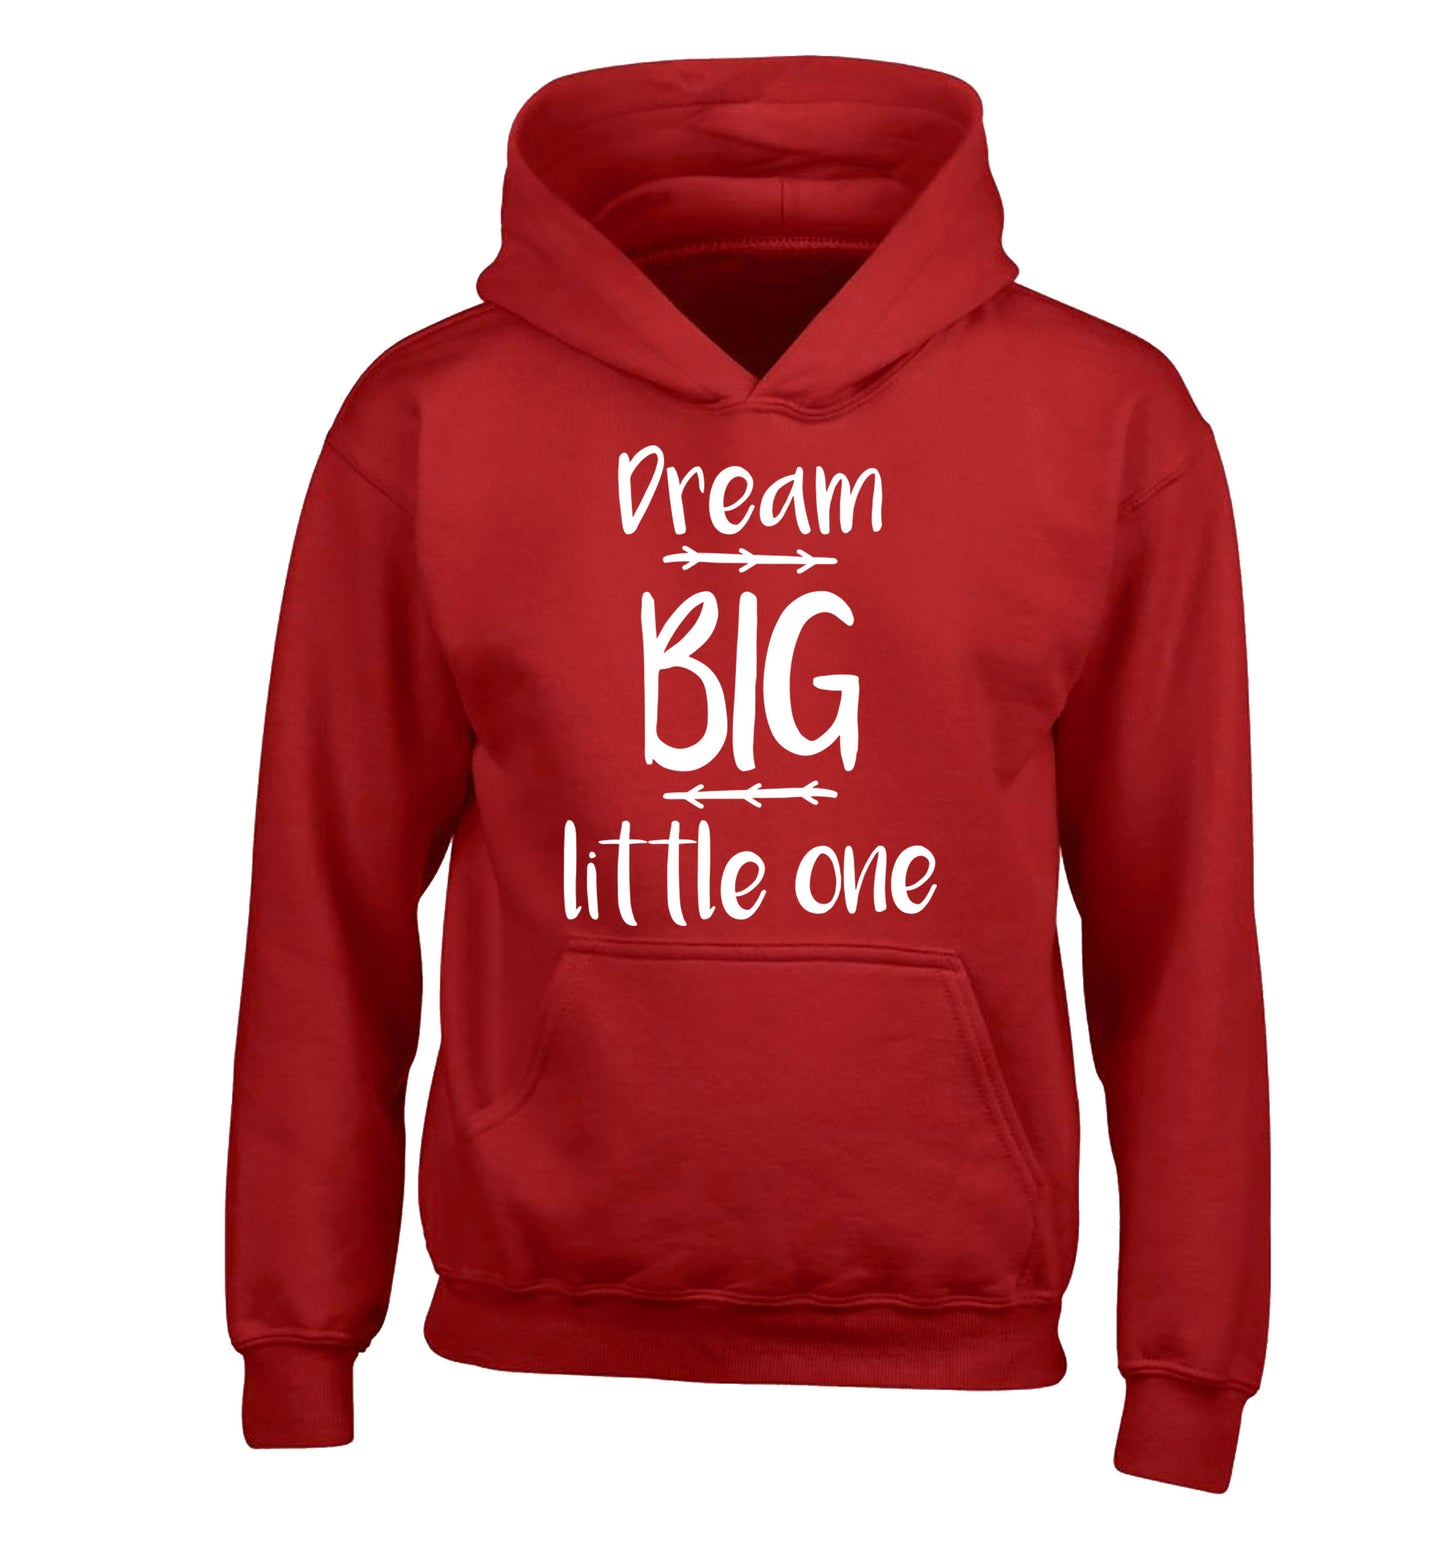 Dream big little one children's red hoodie 12-14 Years